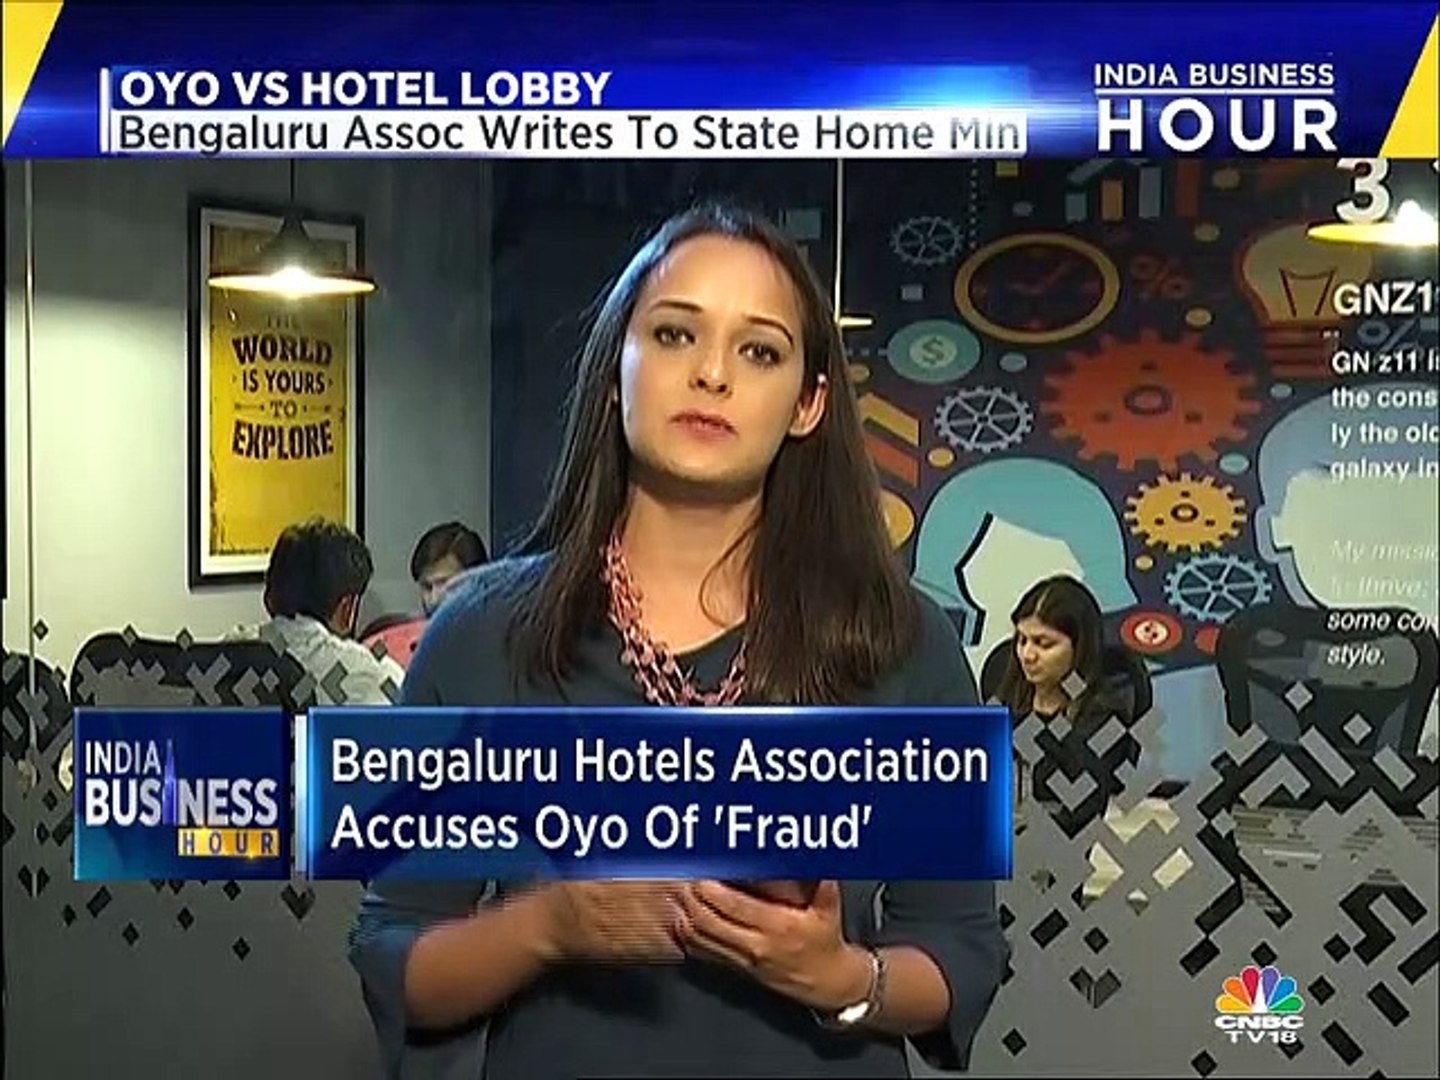 Bengaluru hotels association accuses OYO of fraud - video Dailymotion